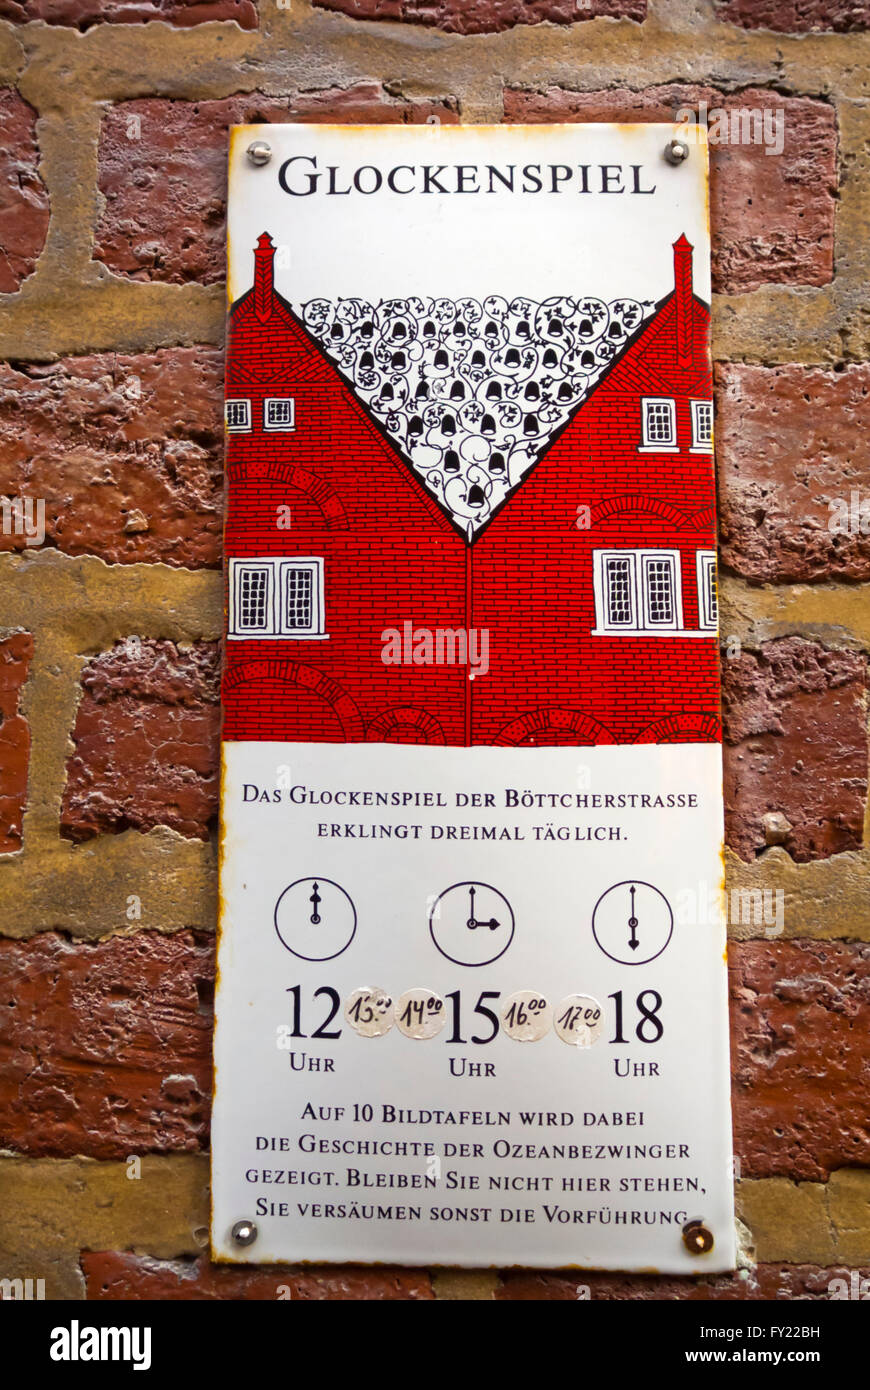 Glockenspiel, clockwork, schedule, Böttcherstrasse street, Altstadt, old town, Bremen, Germany Stock Photo